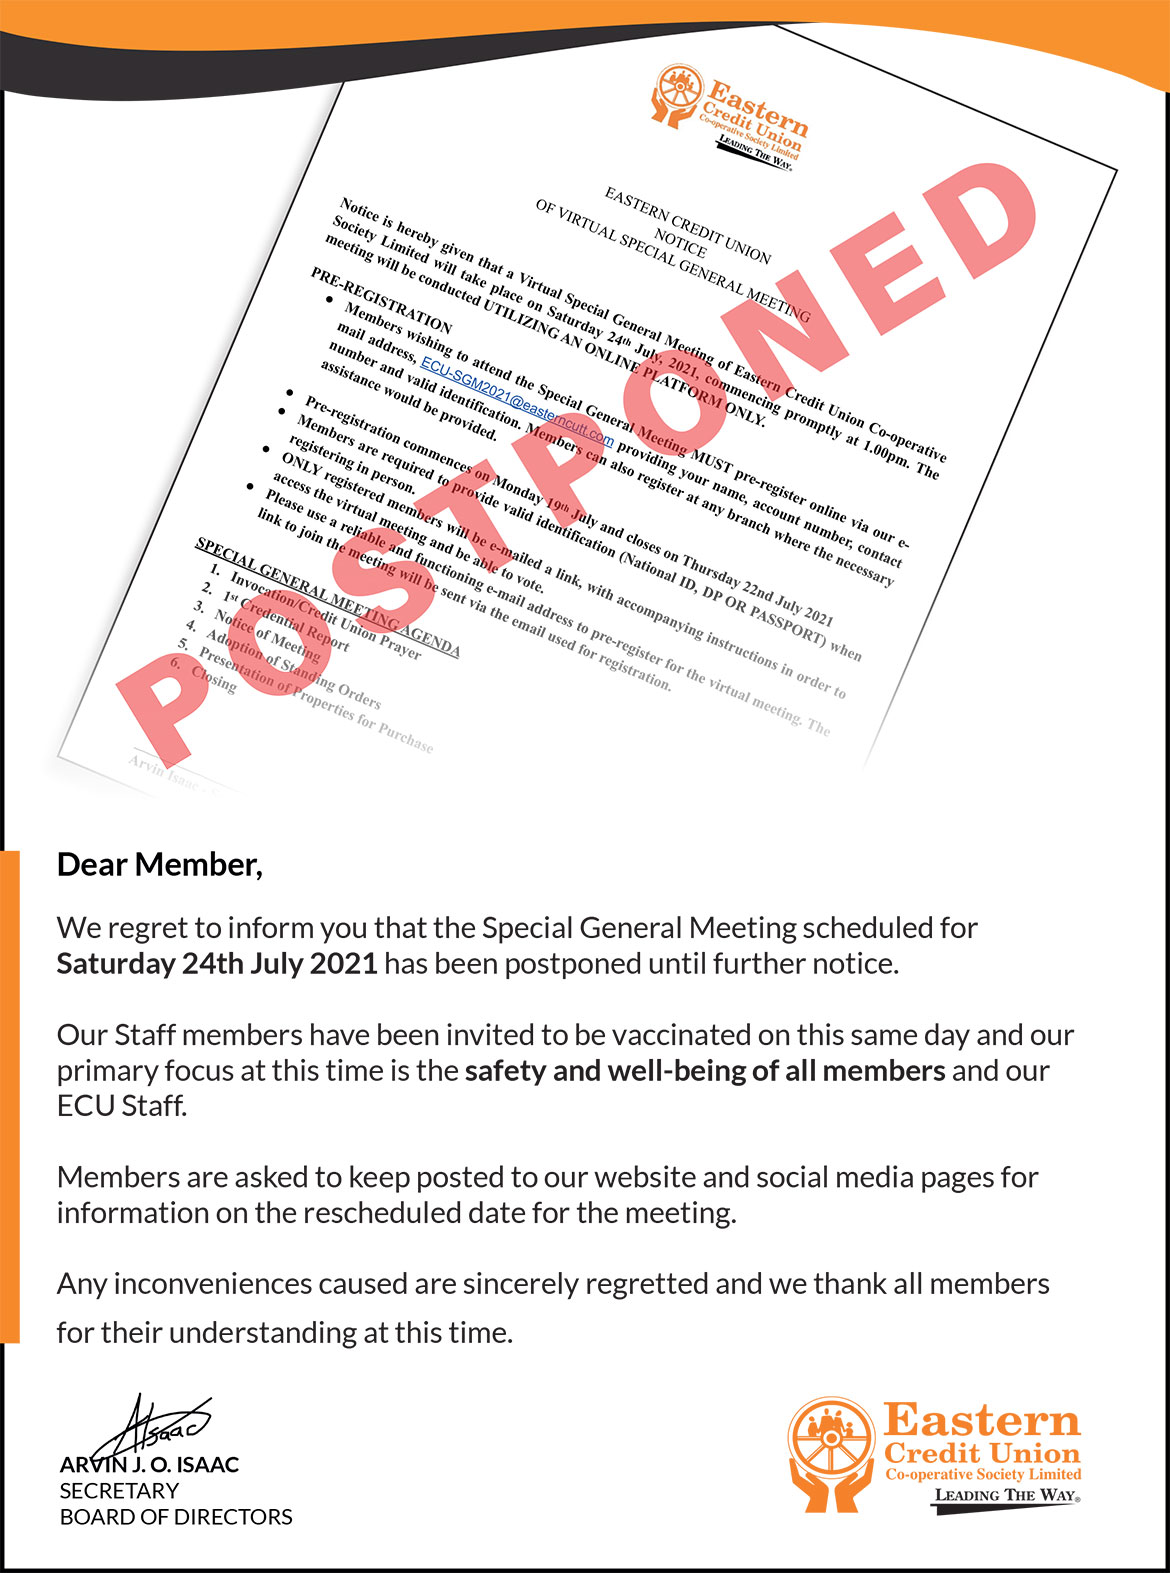 Postponement of Special General Meeting